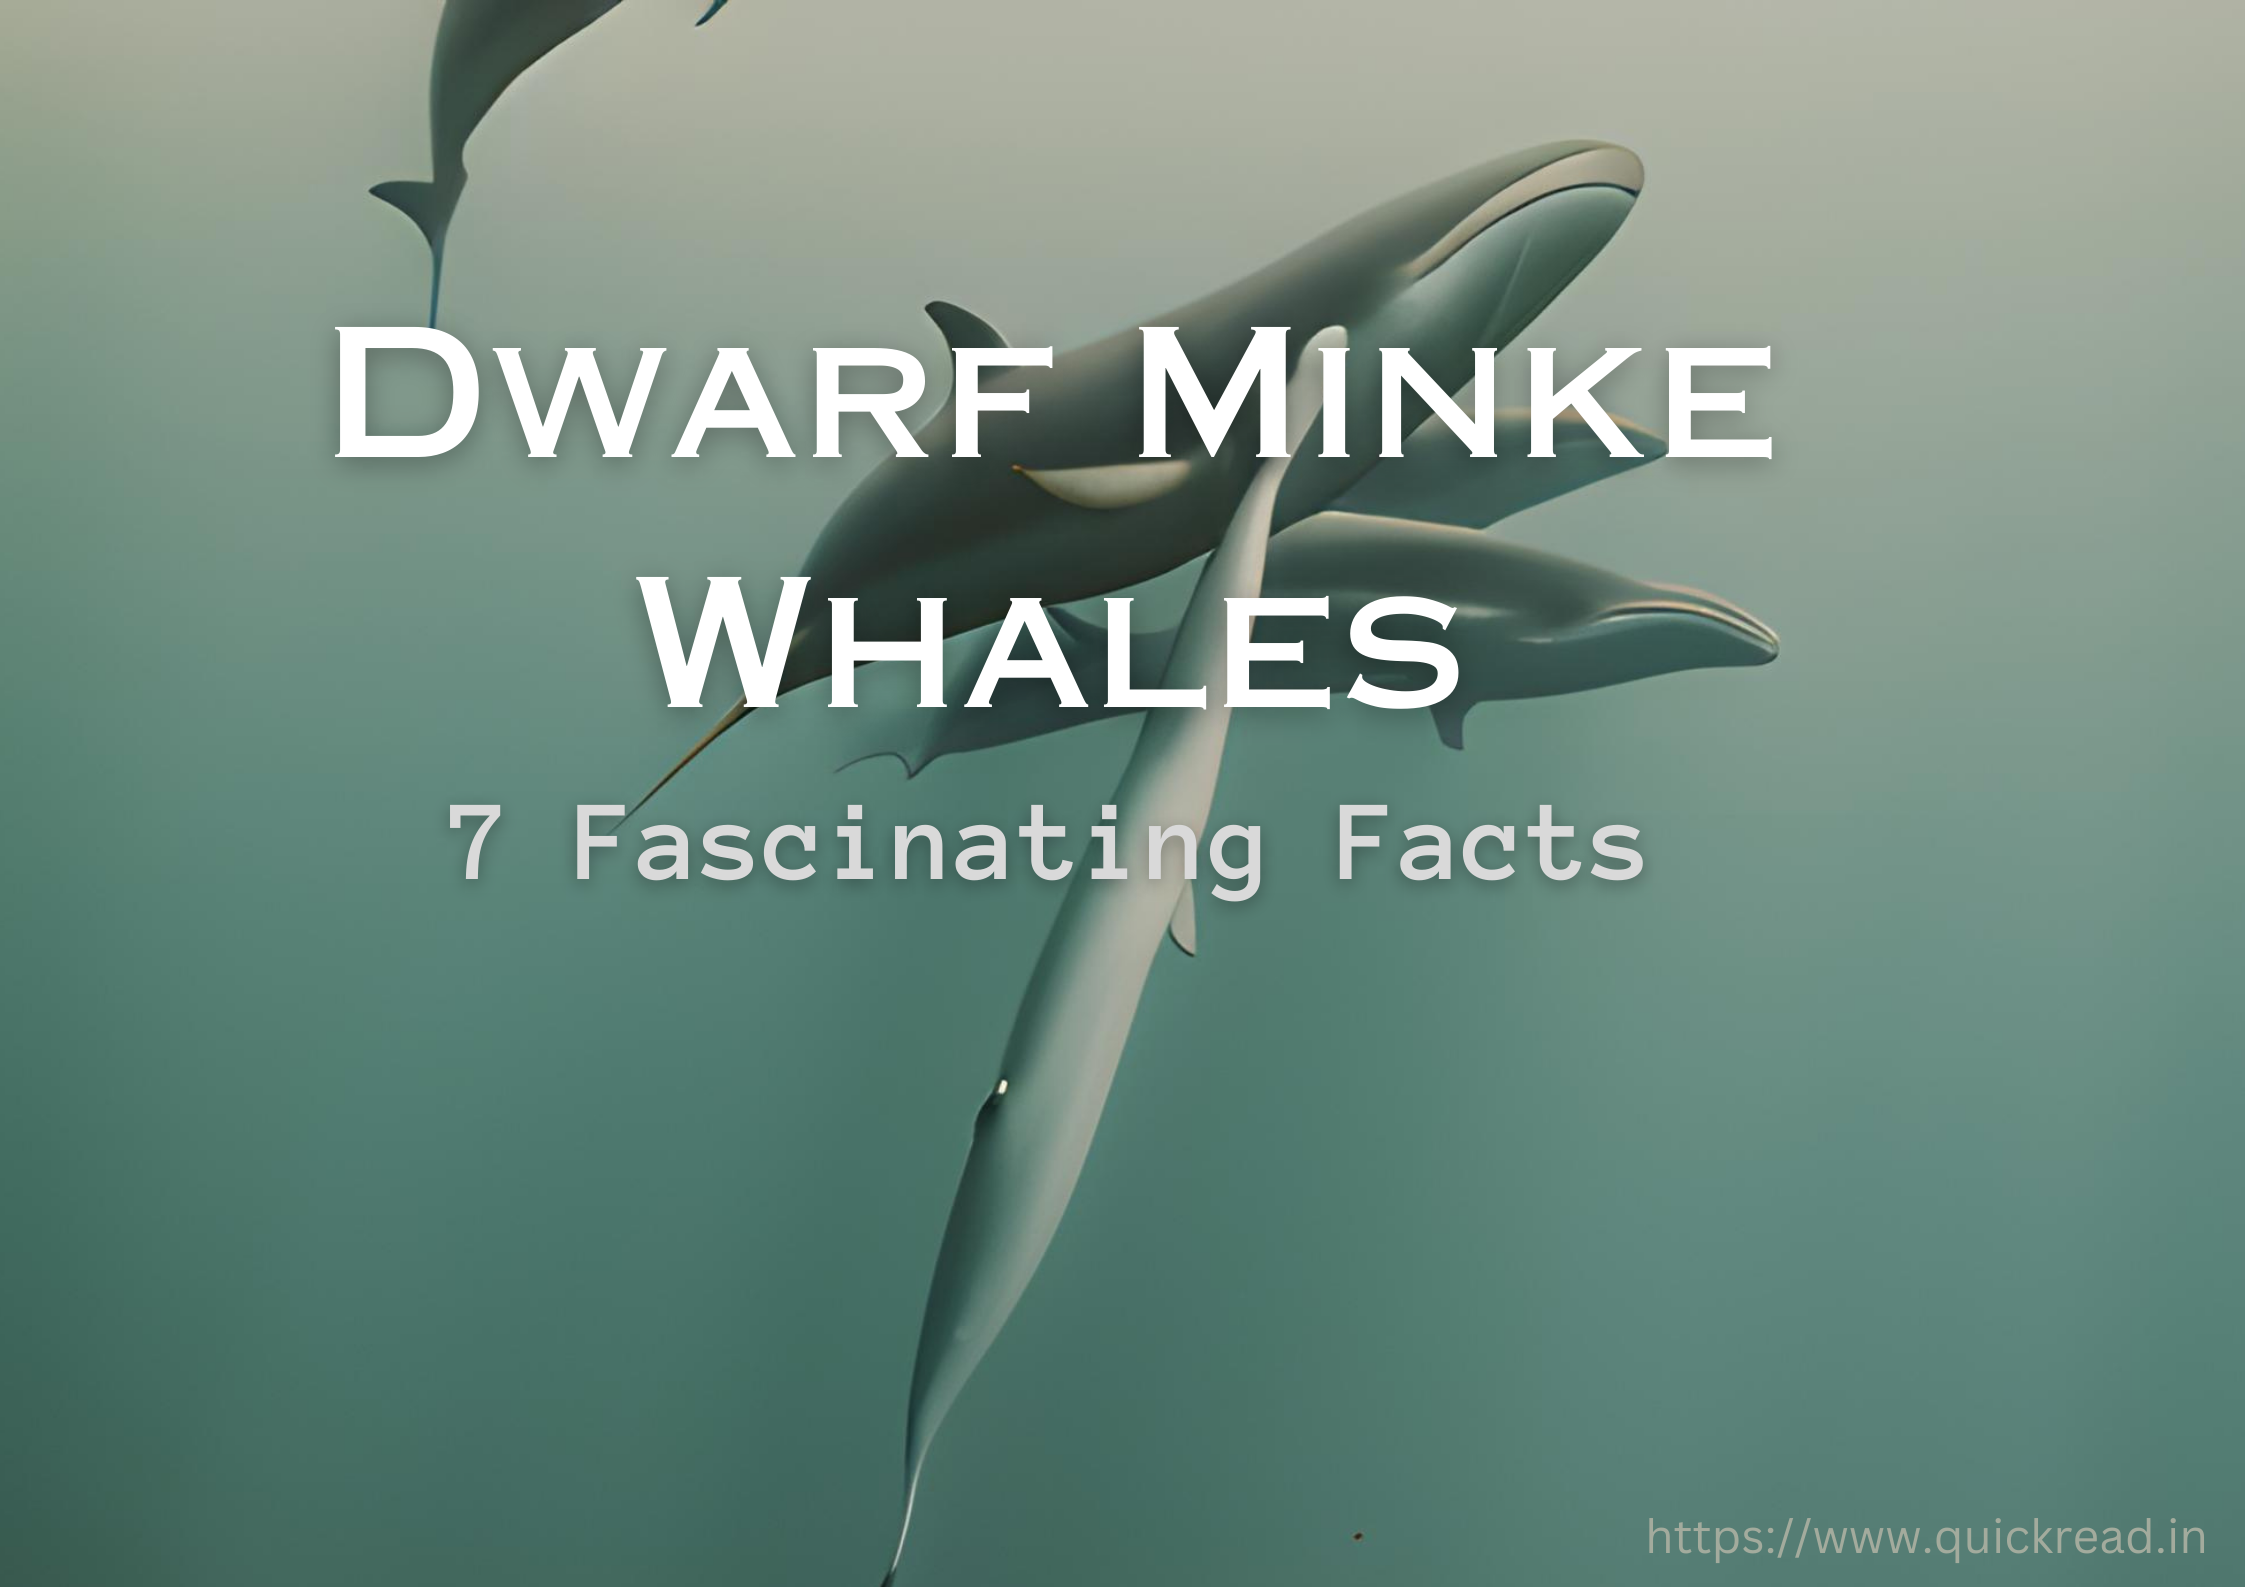 Dwarf Minke Whales: 7 Fascinating Facts